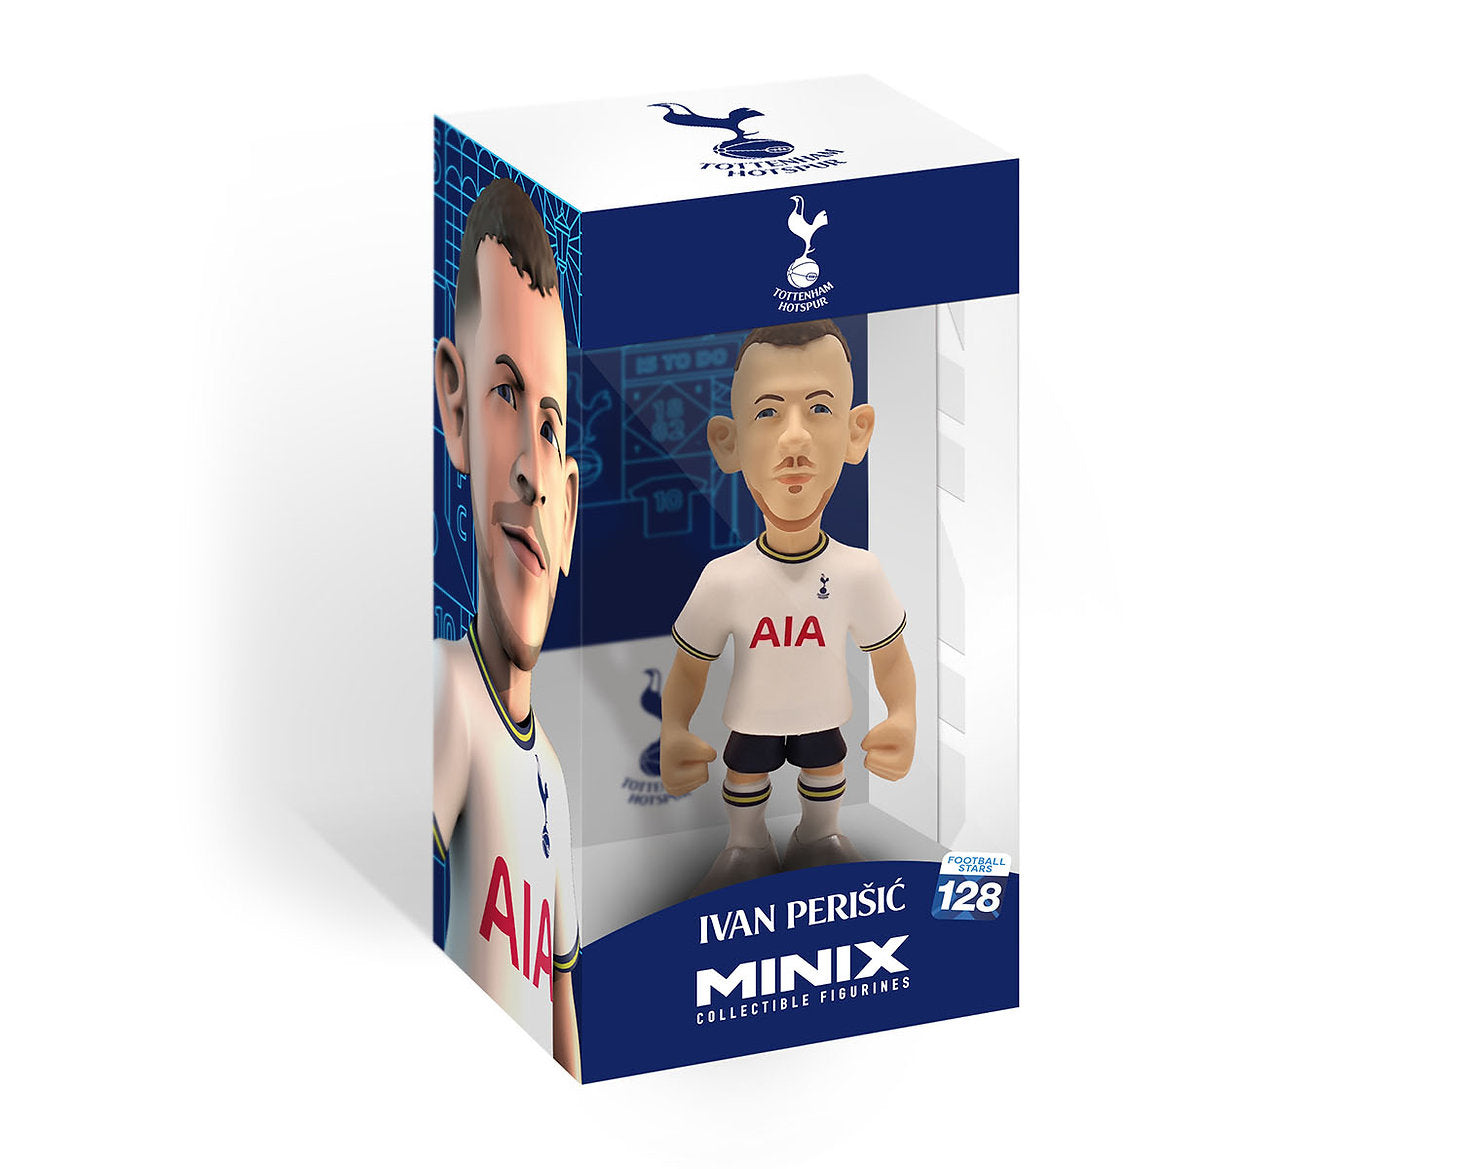 Minix - Football Stars #128 - Tottenham Hotspur Football Club - Ivan Perišic "14" - Figurine 12cm